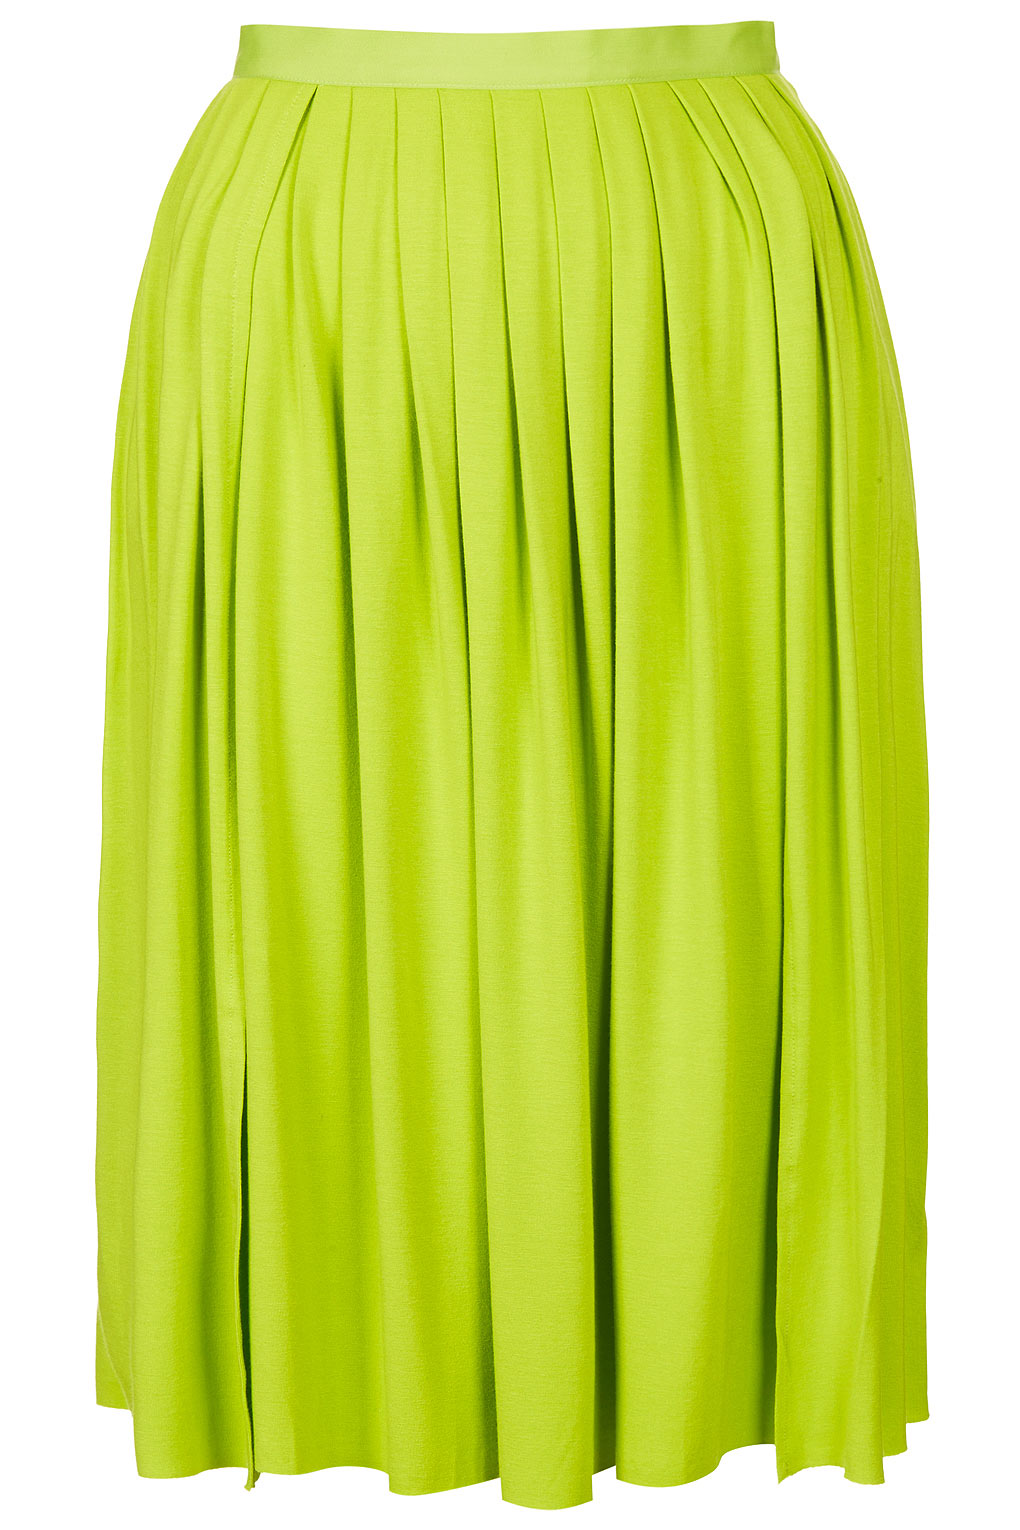 Topshop Lime Pleat Split Calf Skirt in Green (lime) | Lyst